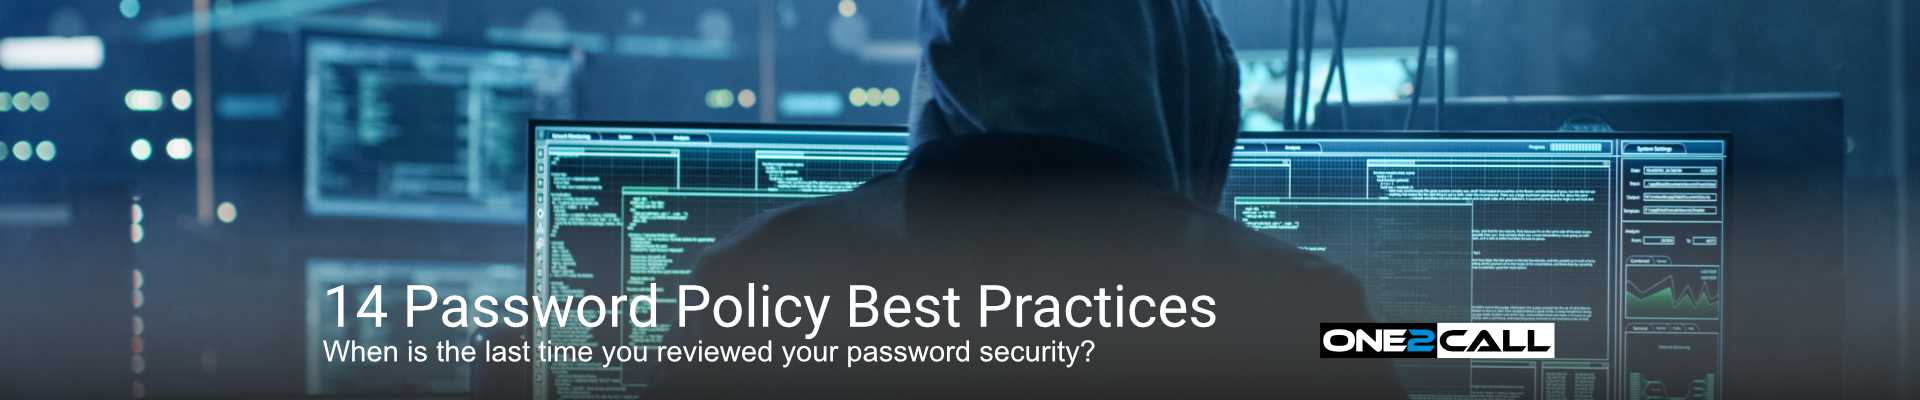 14 Password Policy Best Practices